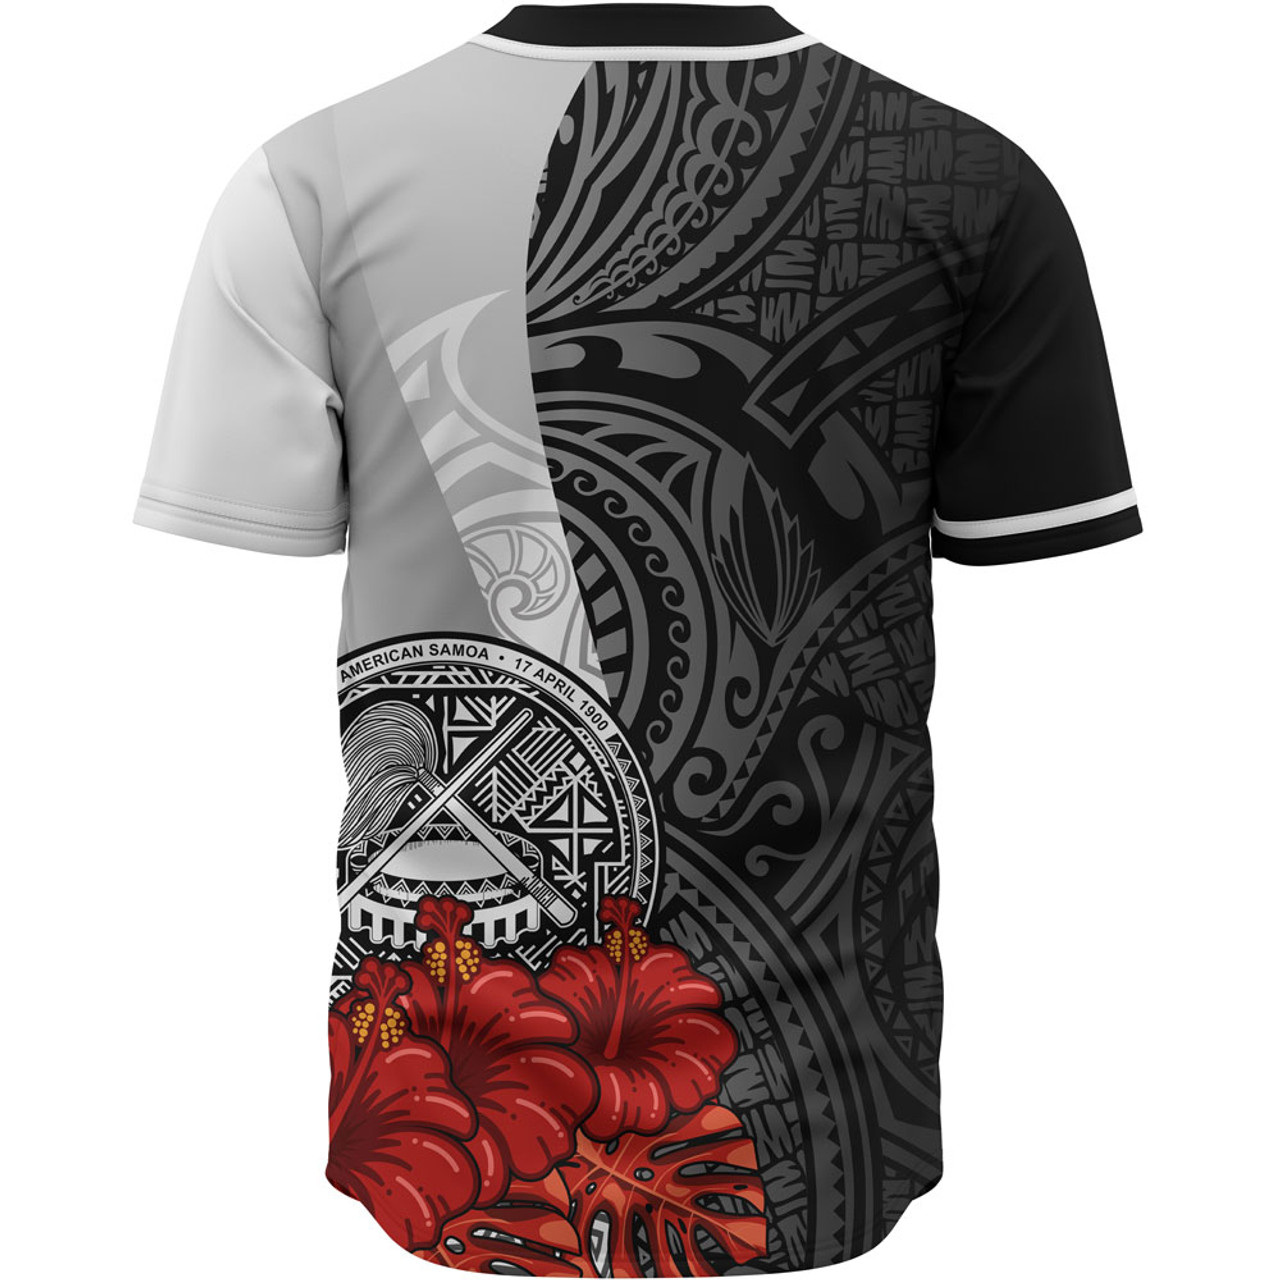 American Samoa Polynesian Baseball Shirt - Coat Of Arm With Hibiscus White